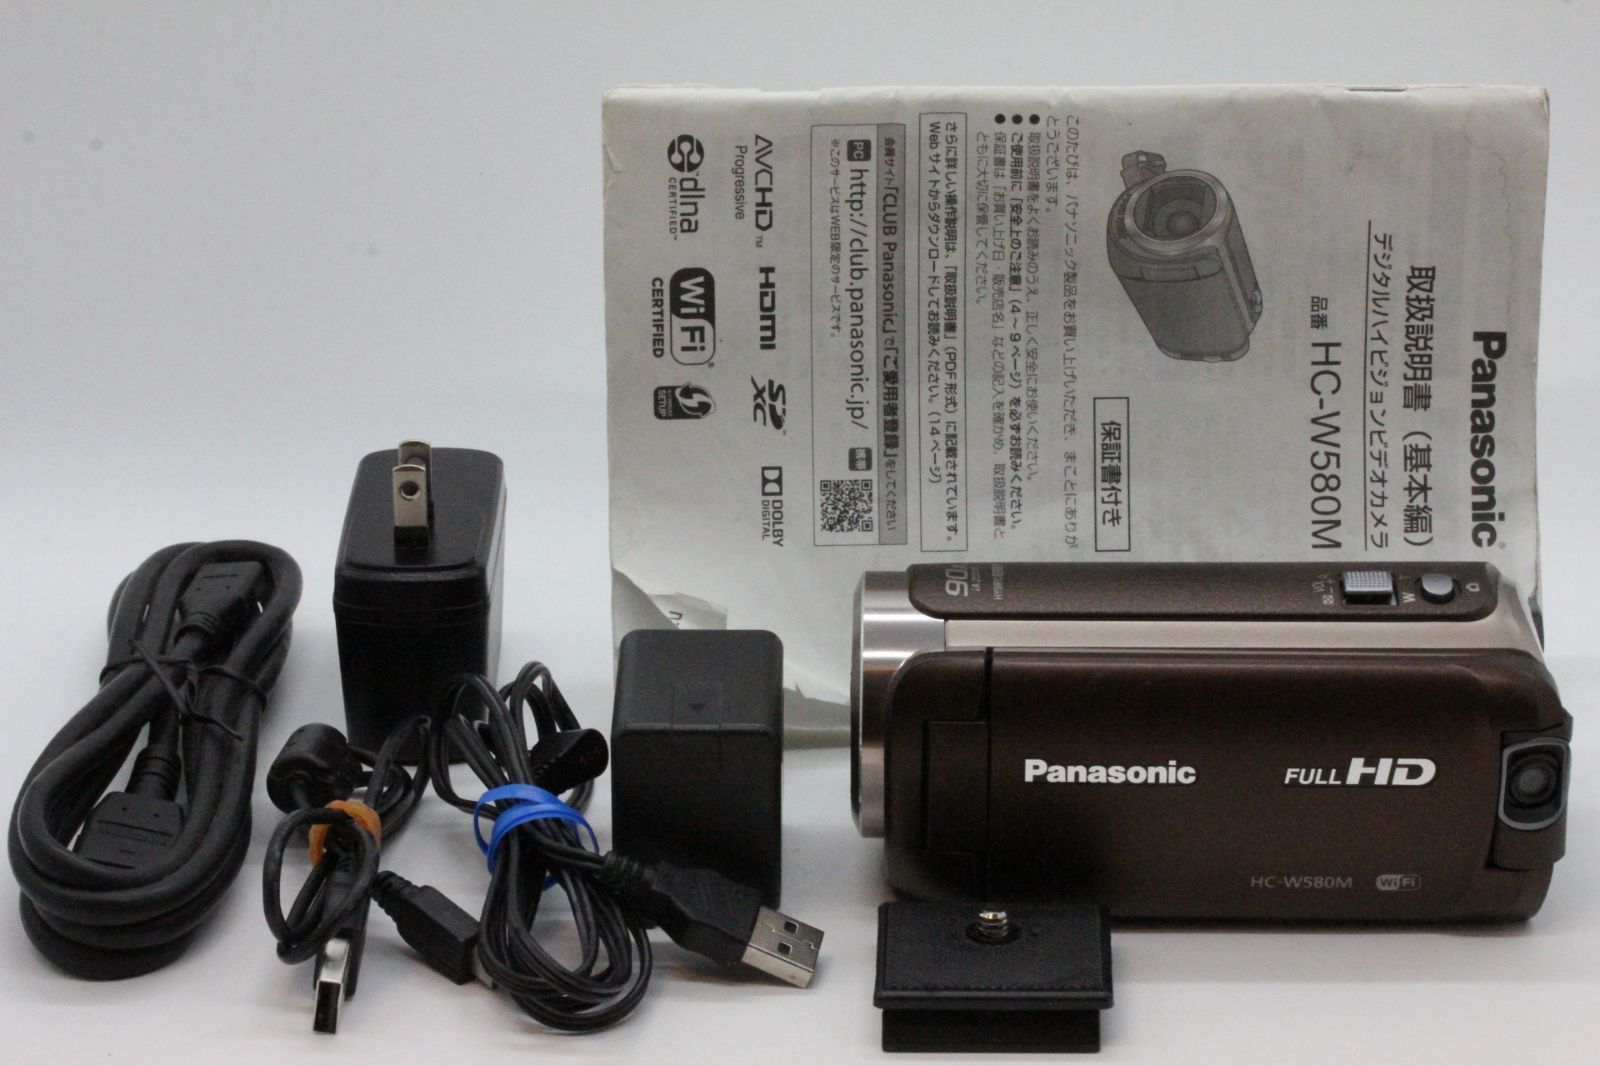 Panasonic HDビデオカメラ W580M 32GB サブカメラ搭載 高倍率90倍